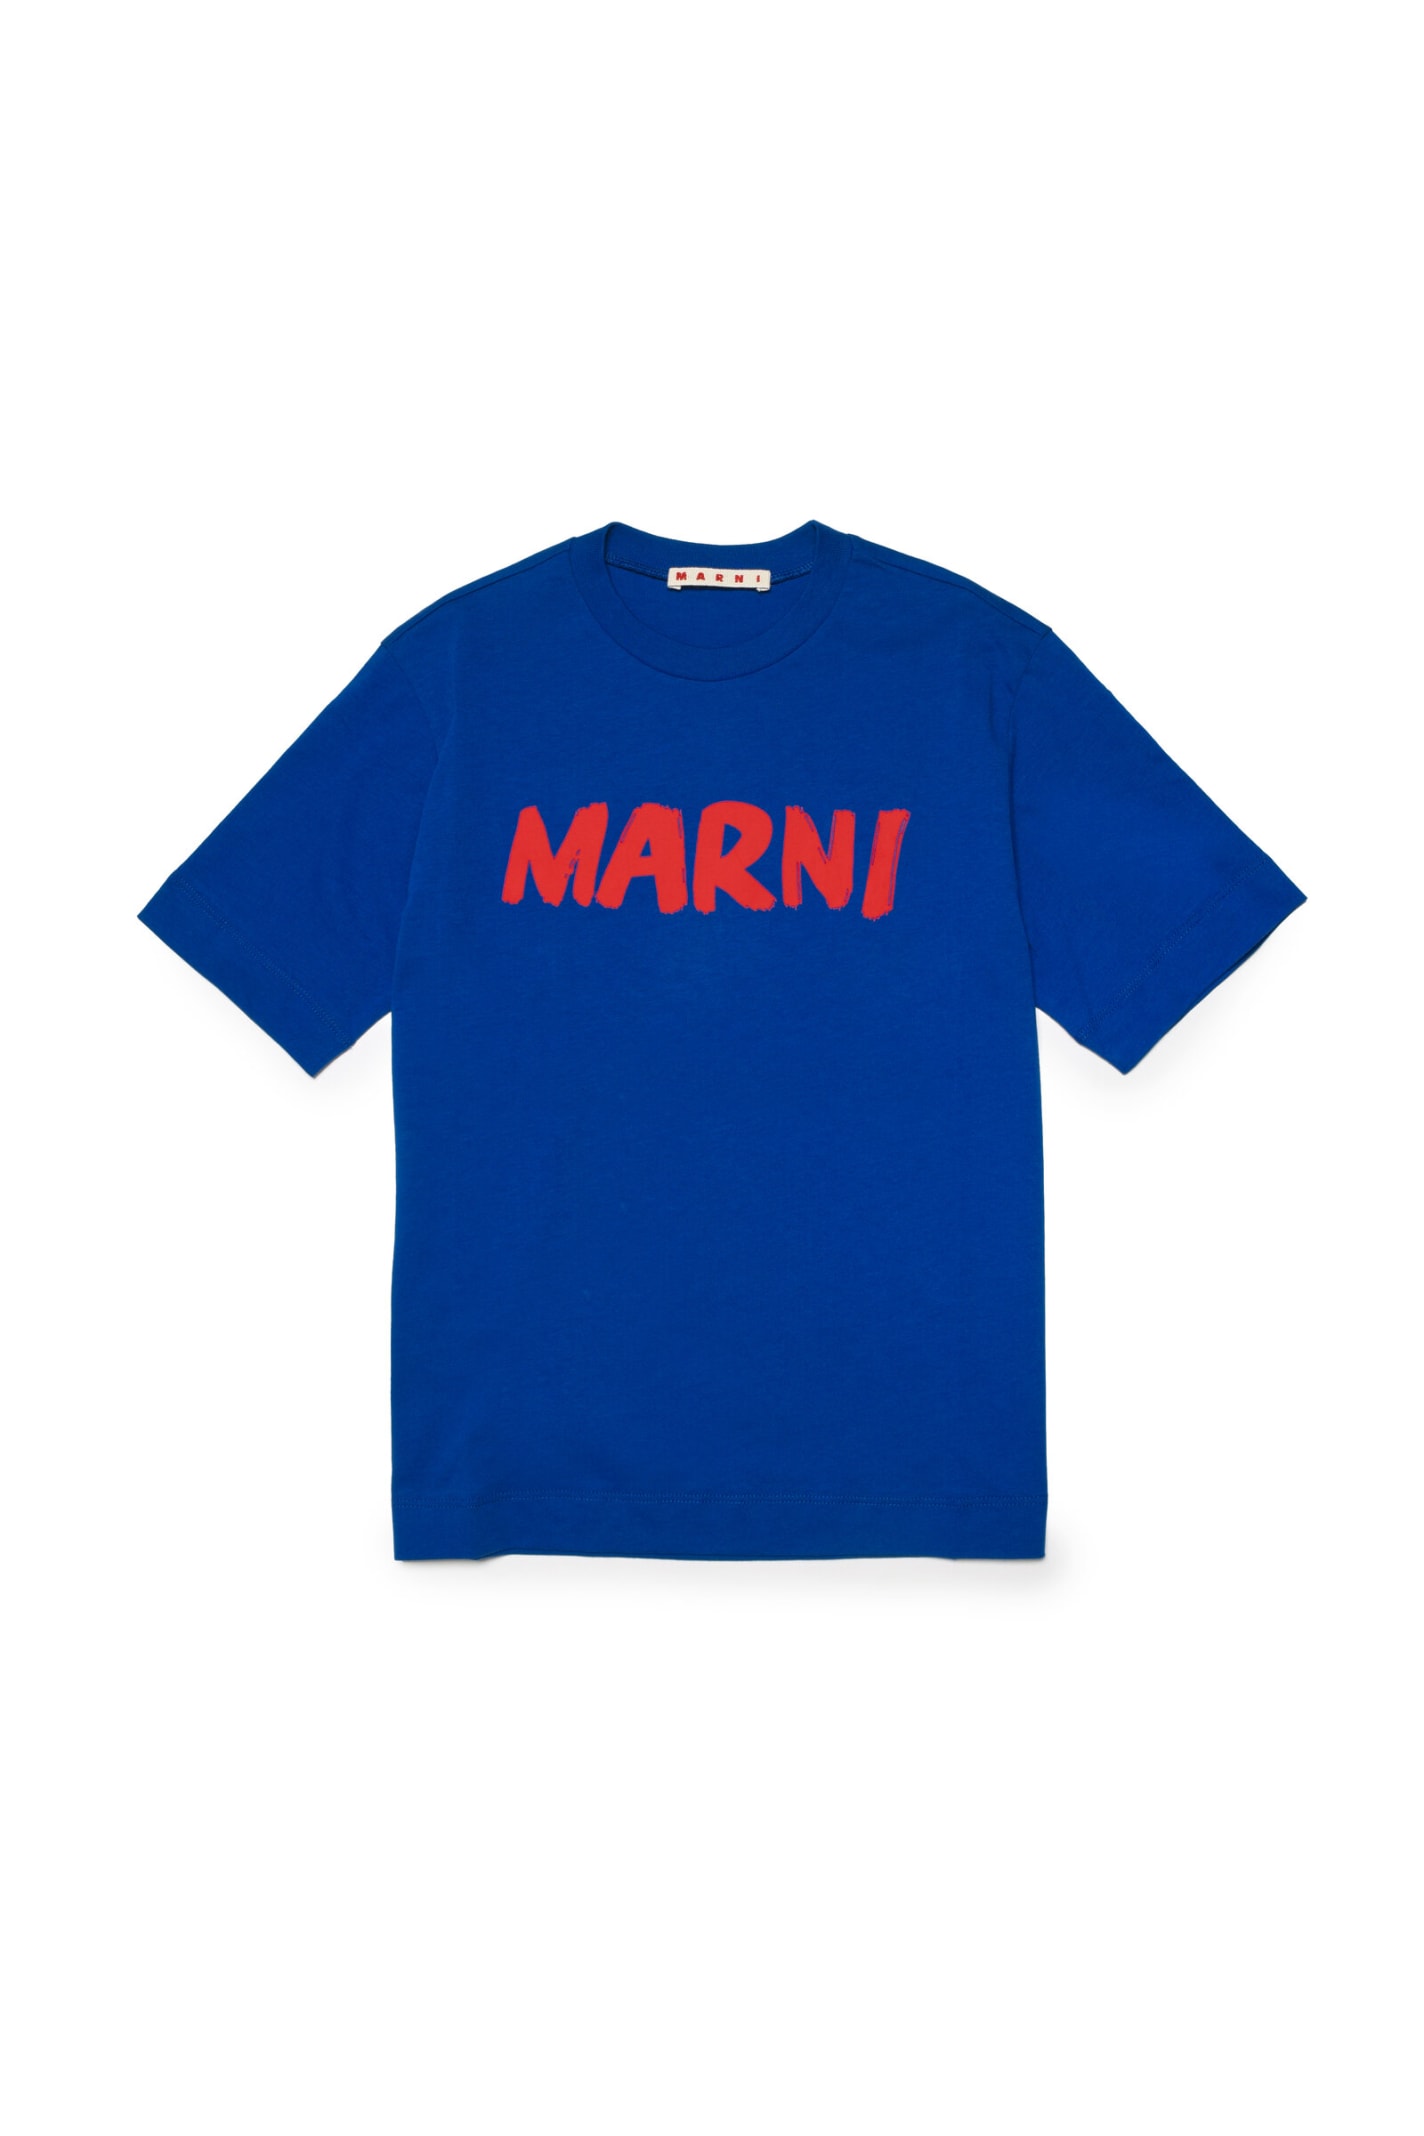 MARNI MT149AU T-SHIRT MARNI BLUE JERSEY T-SHIRT WITH MARNI BRUSH LOGO